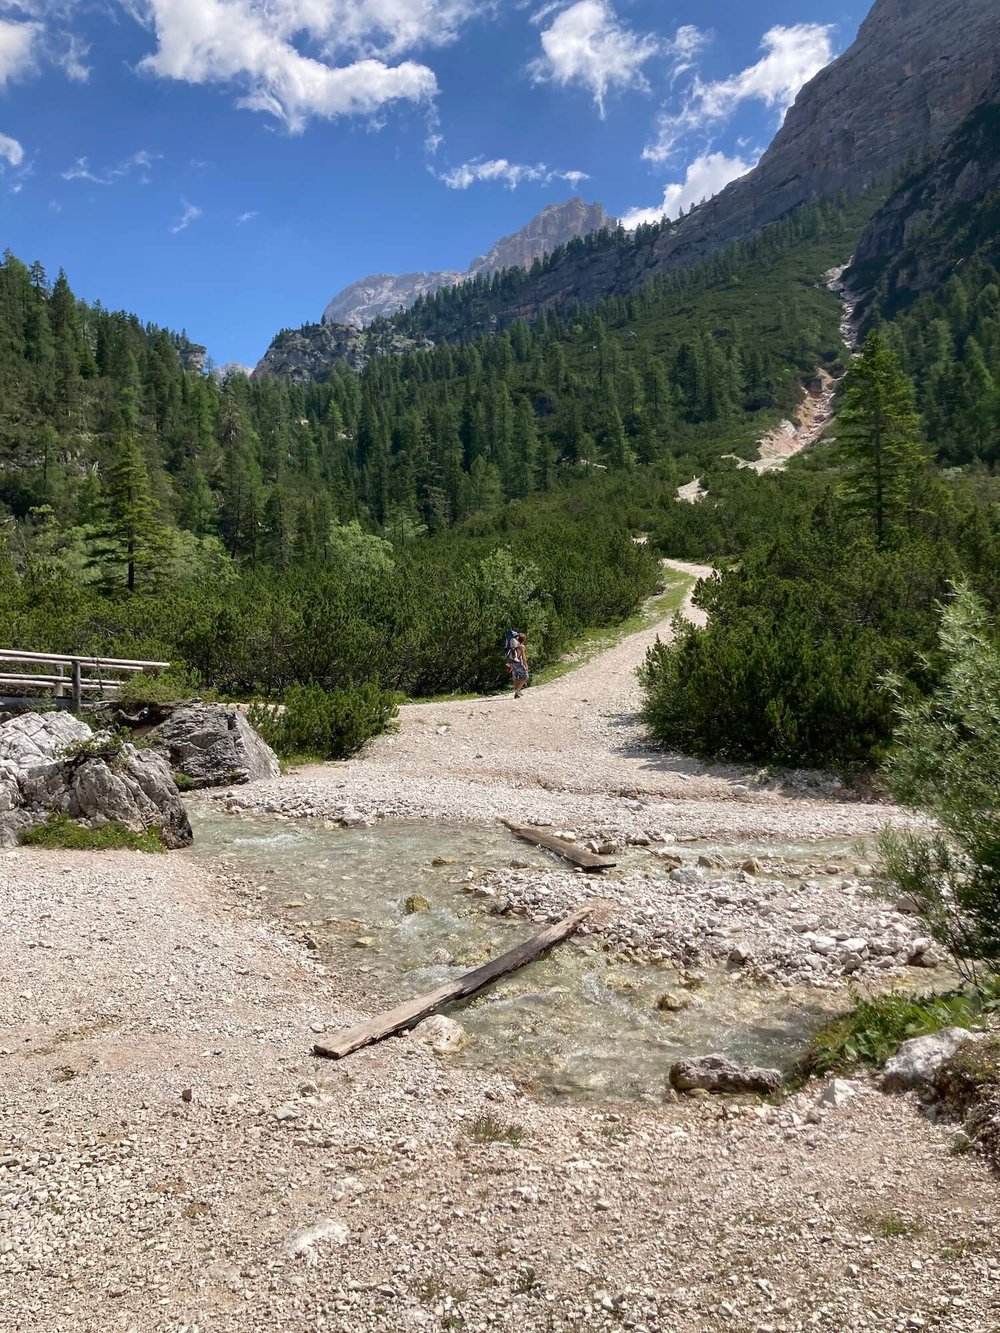 Route via Capanna Alpina river crossing (1).jpg